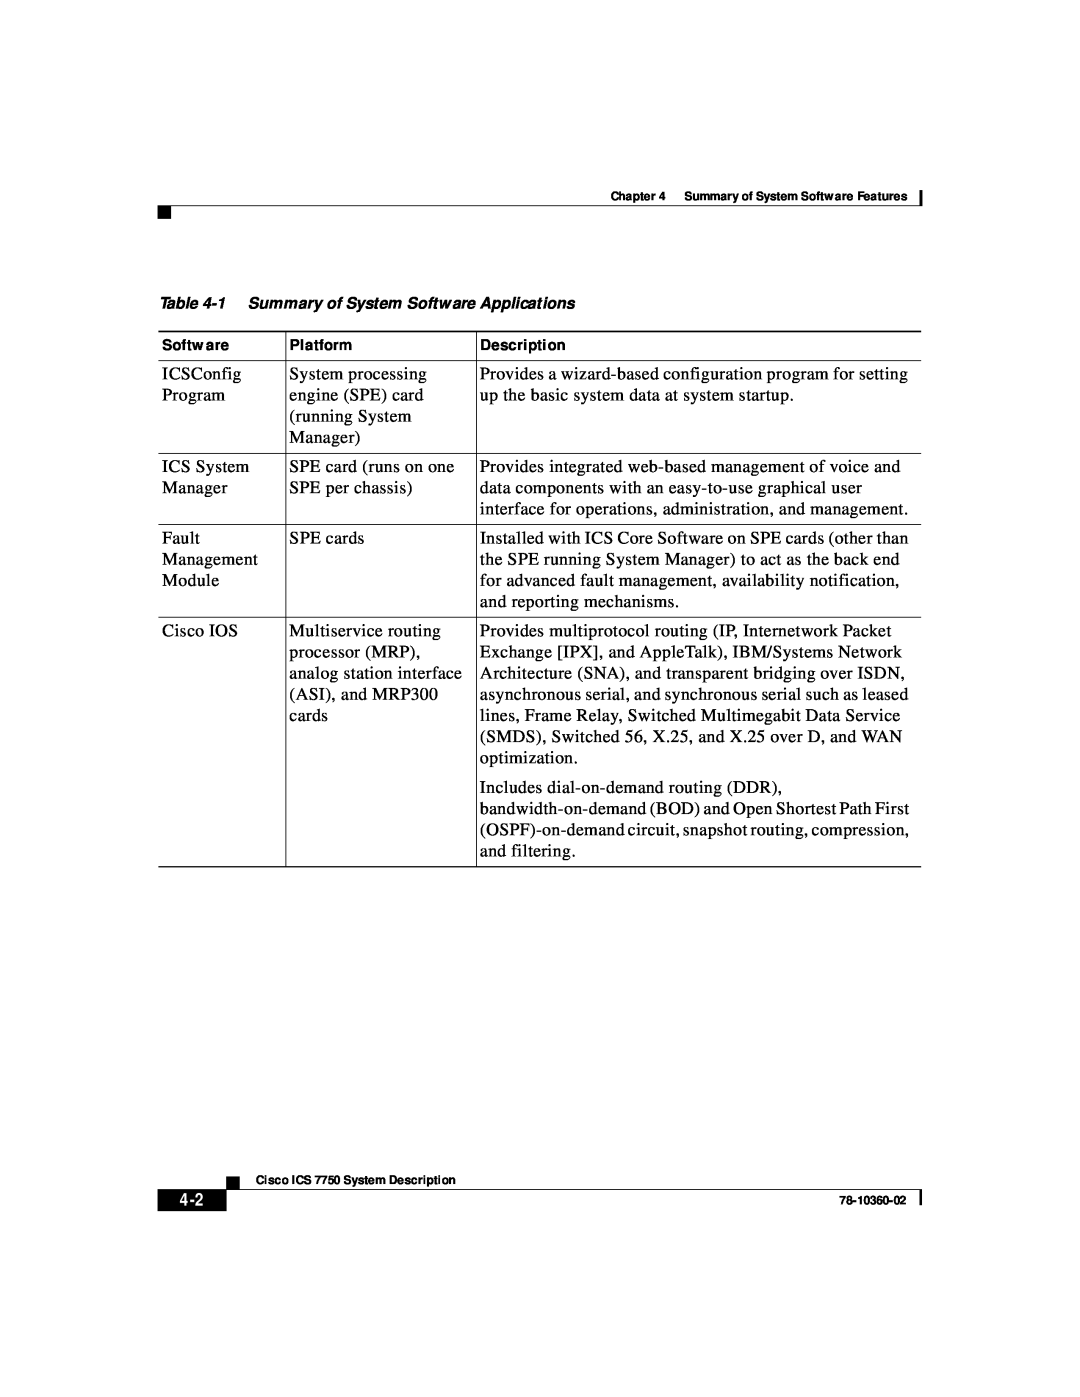 Cisco Systems ICS-7750 manual Platform, Description, 1 Summary of System Software Applications 